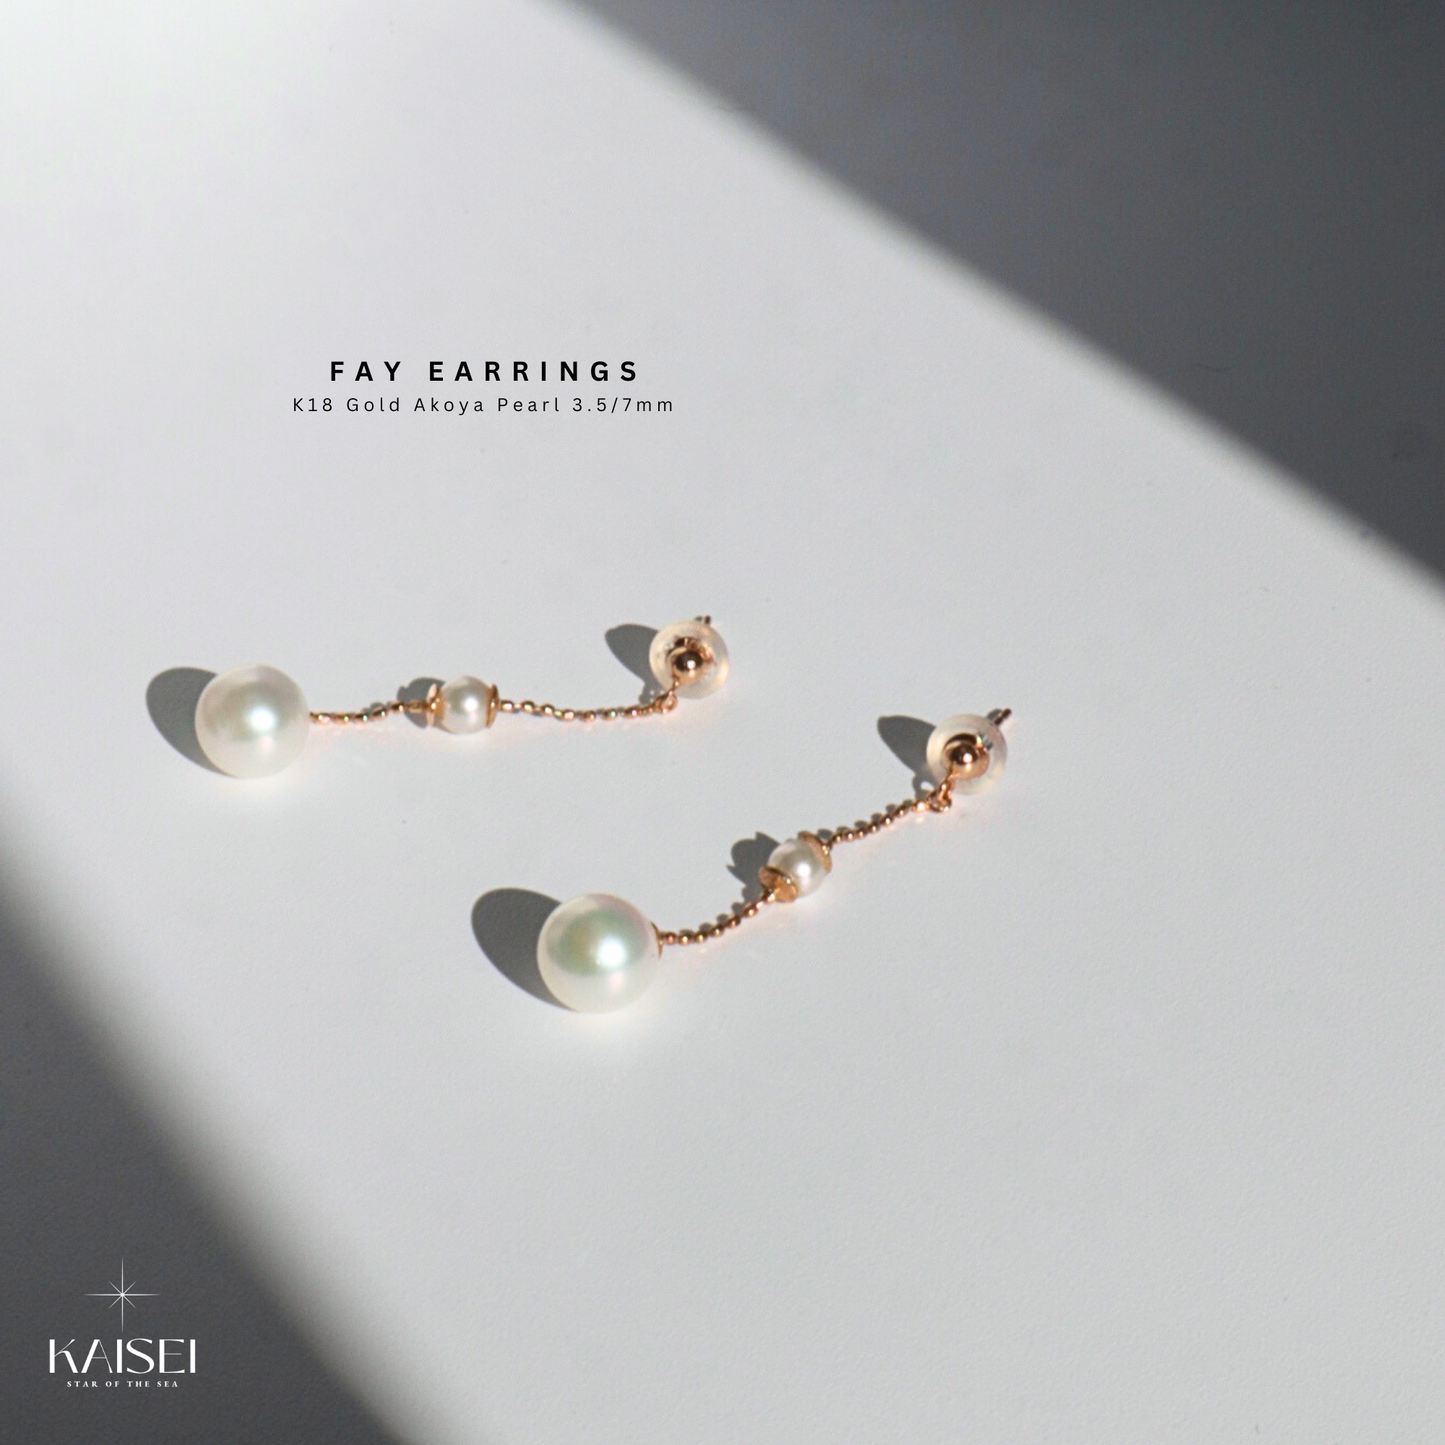 Kaisei Pearl - Fay Earrings K18 Gold Akoya Pearl 3.5/7mm Japanese Pearl Jewelry